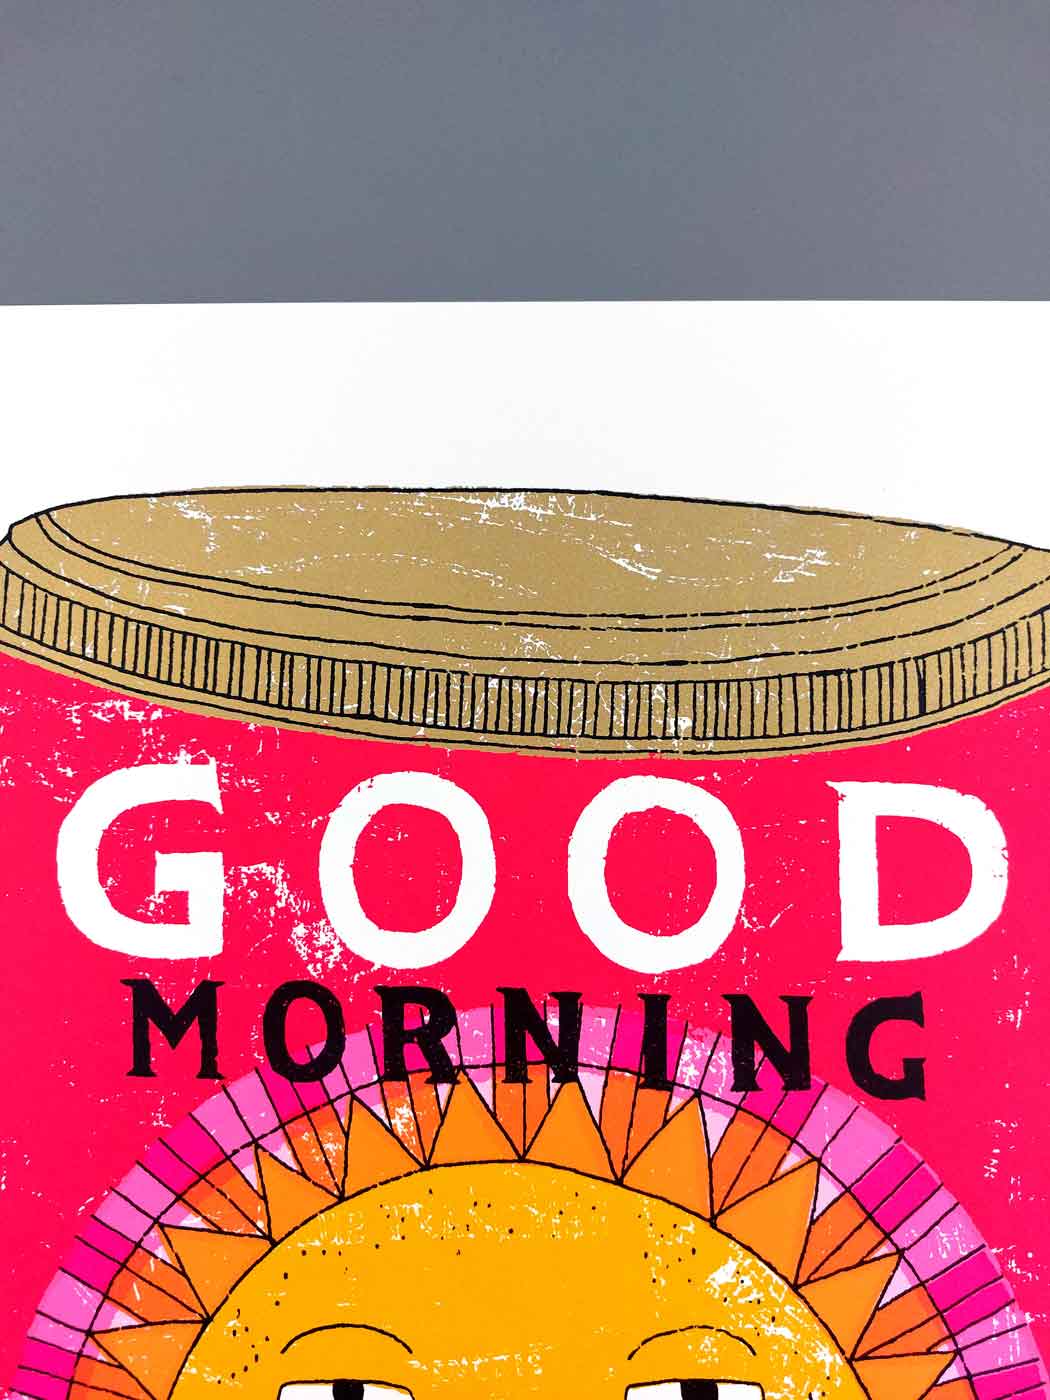 Good Morning Coffee Enlarged